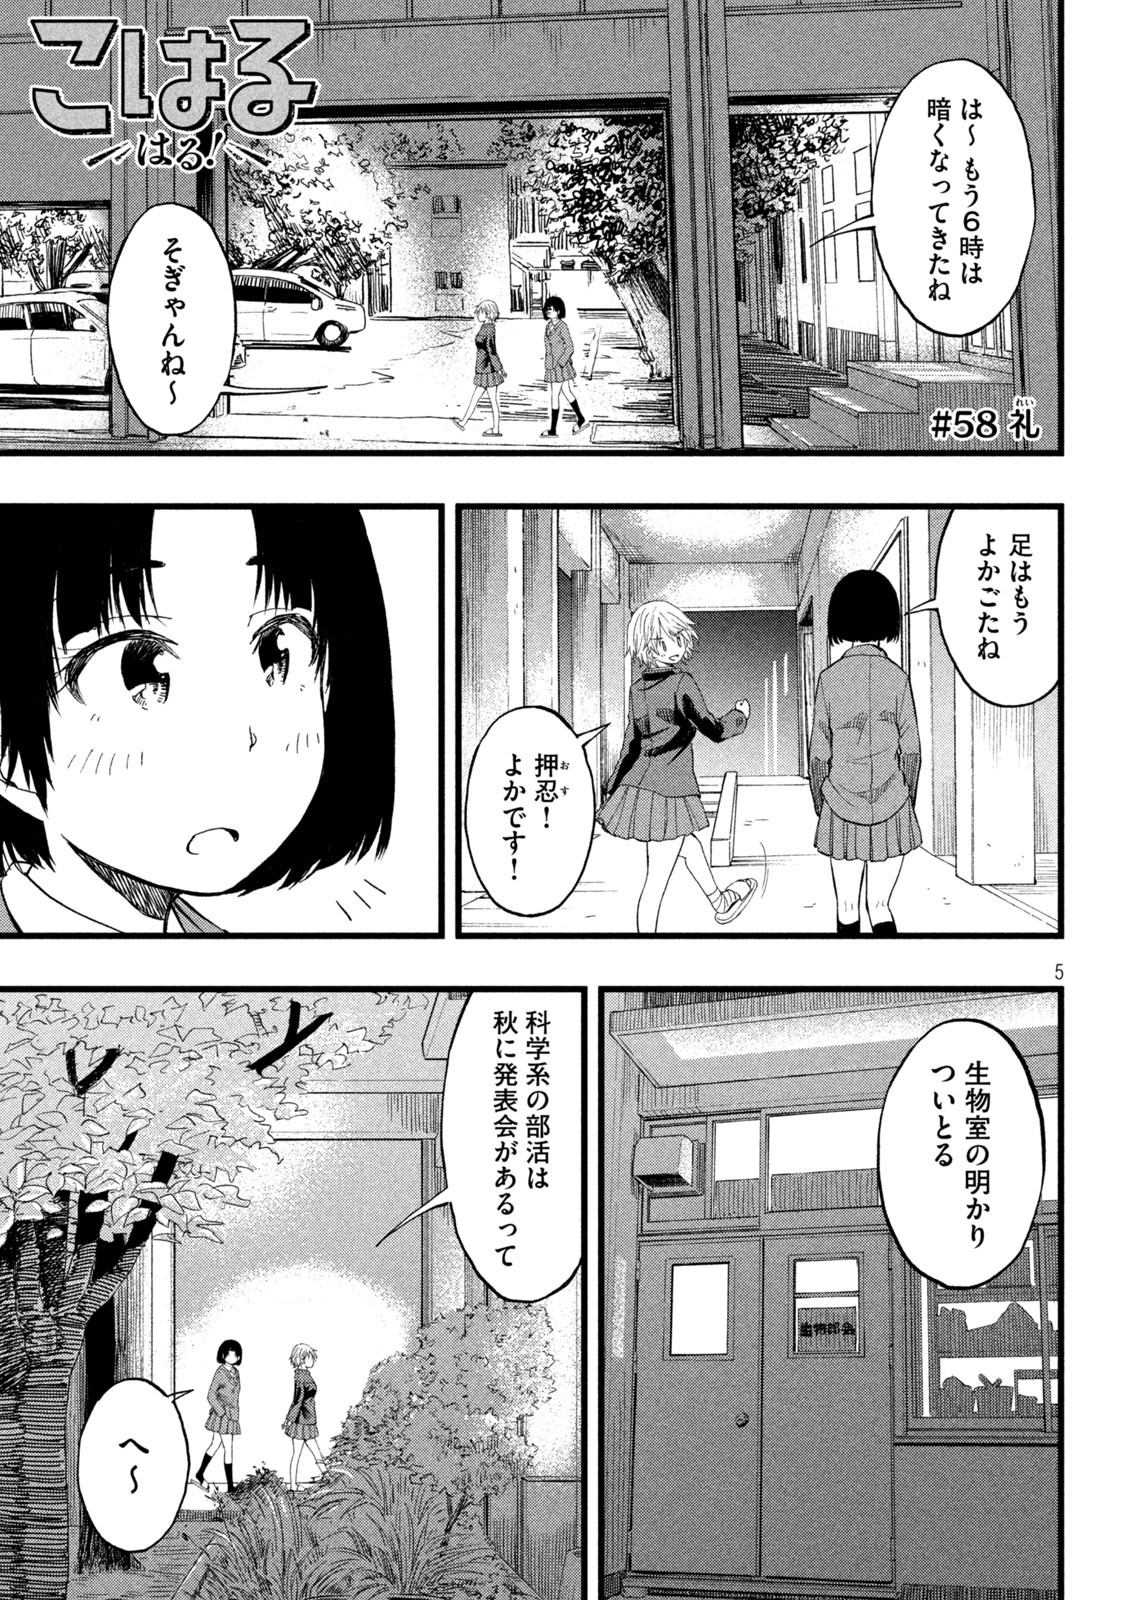 Koharu haru! - Chapter 58 - Page 1